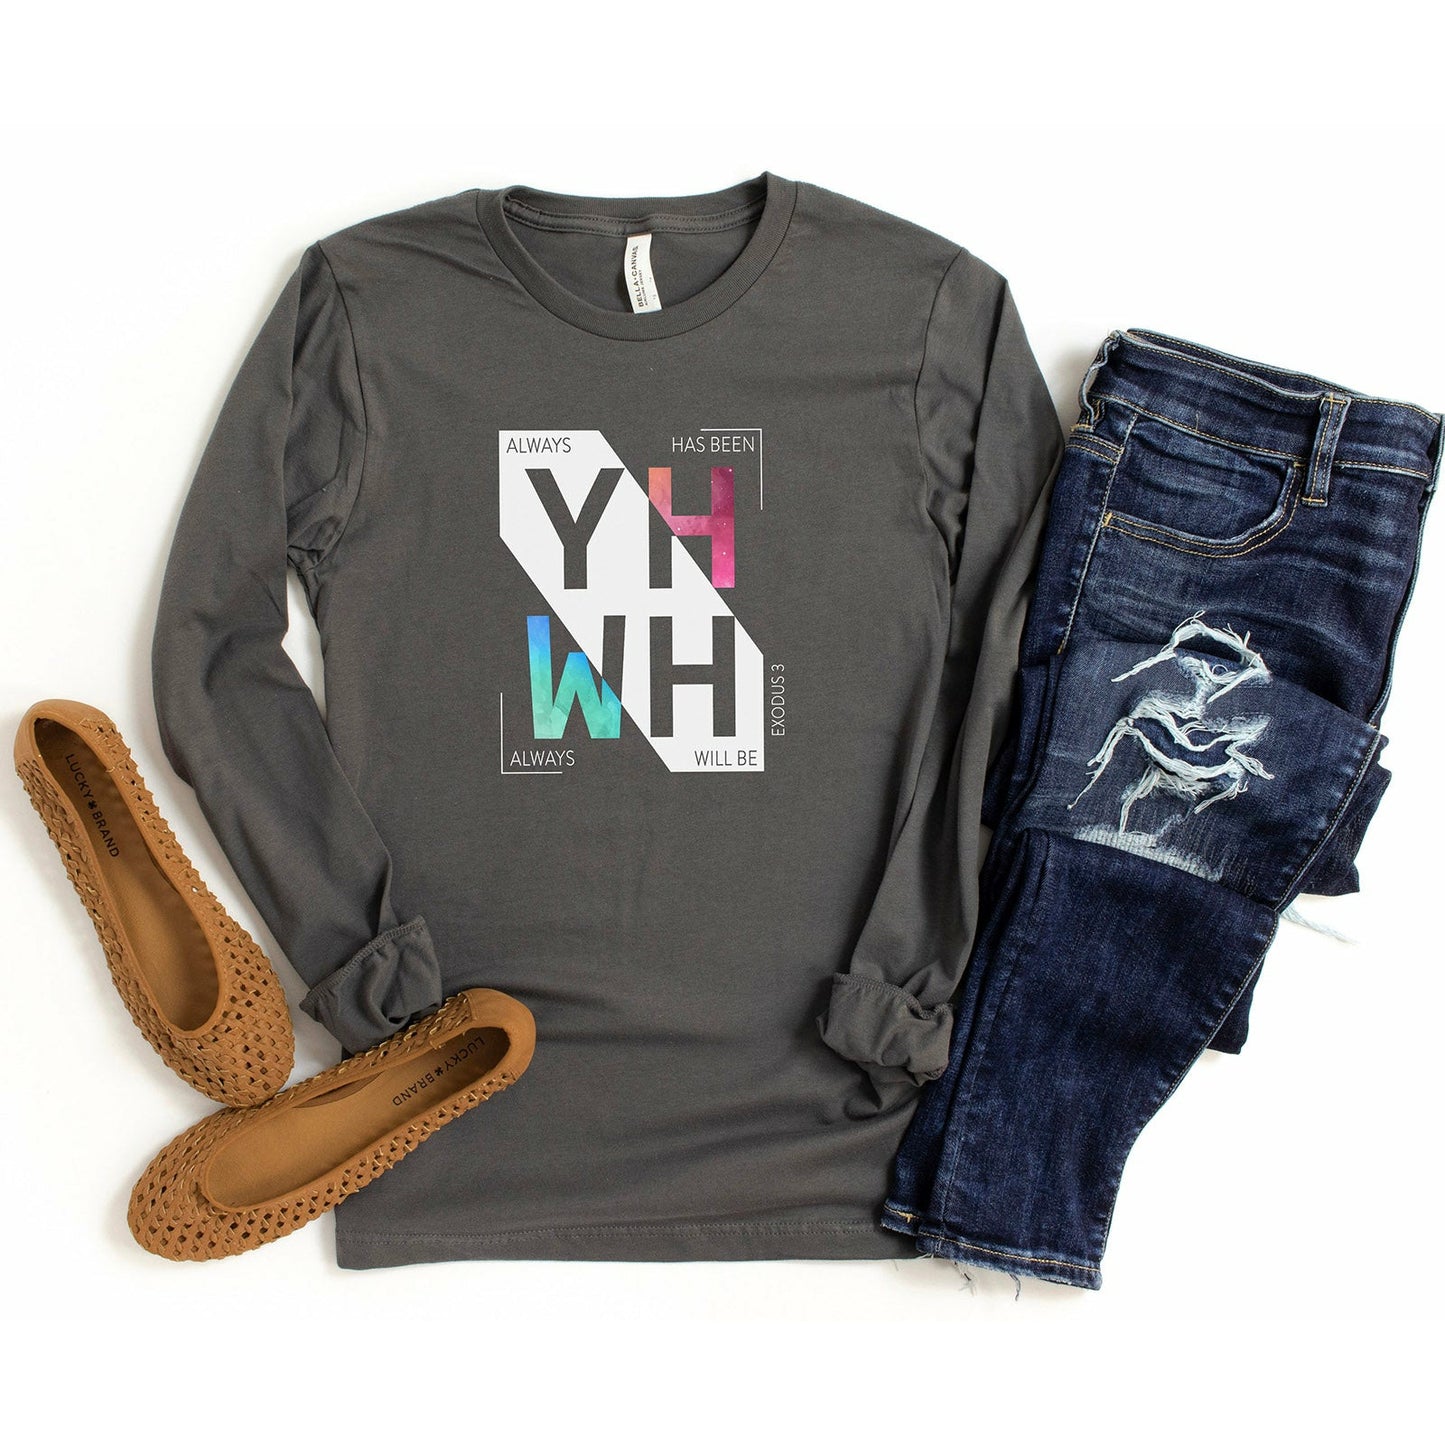 YHWH / Yahweh | Long Sleeve Shirt for Women